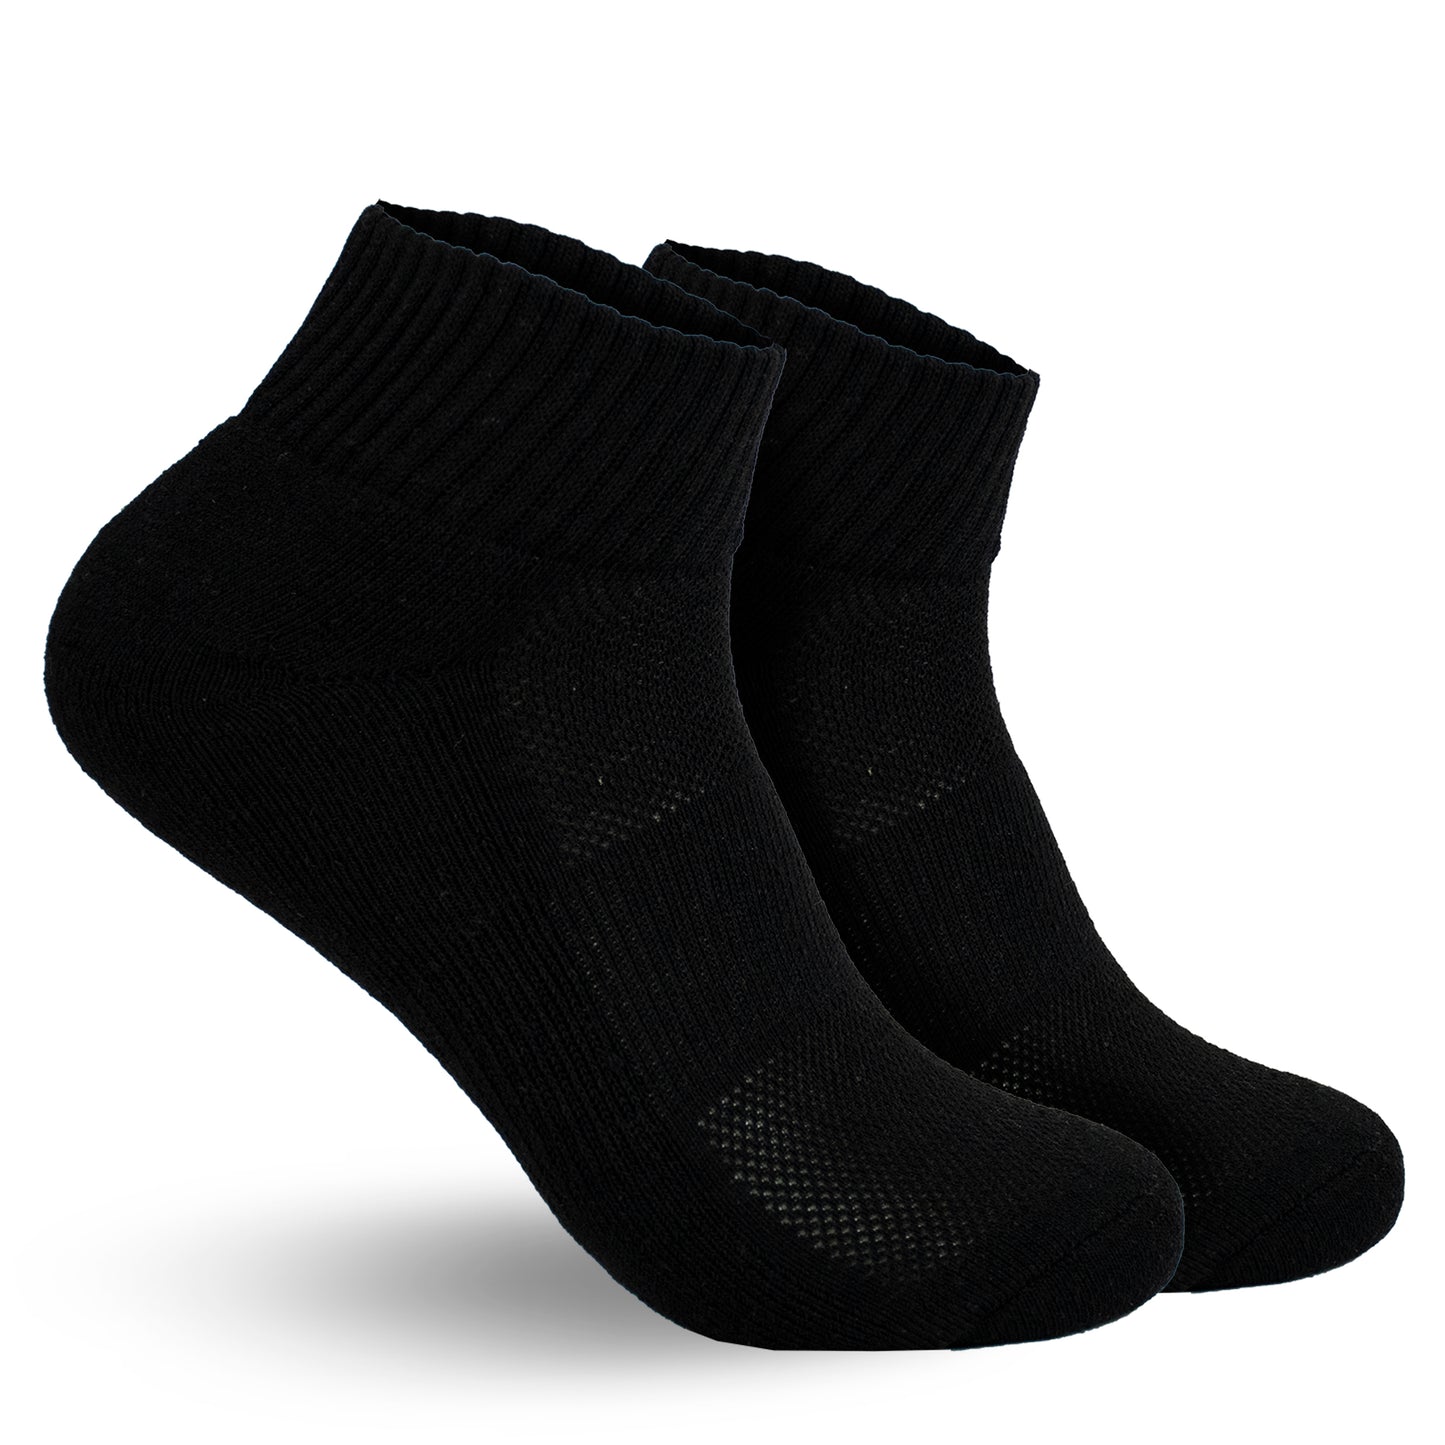 Pack 5 calcetines básicos negros, Calcetines para hombre